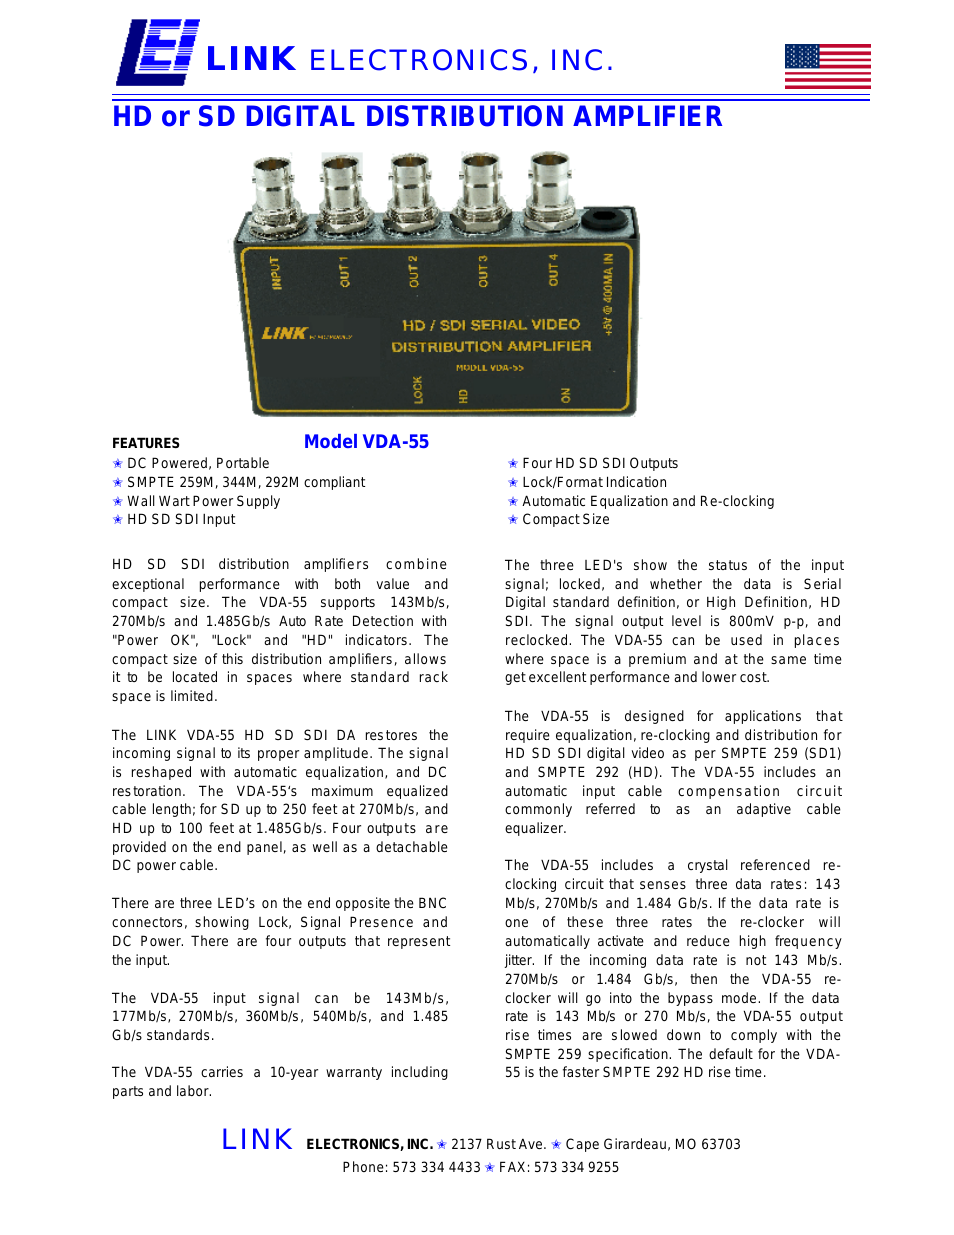 HD SD SDI Distribution Amplifier VDA-55